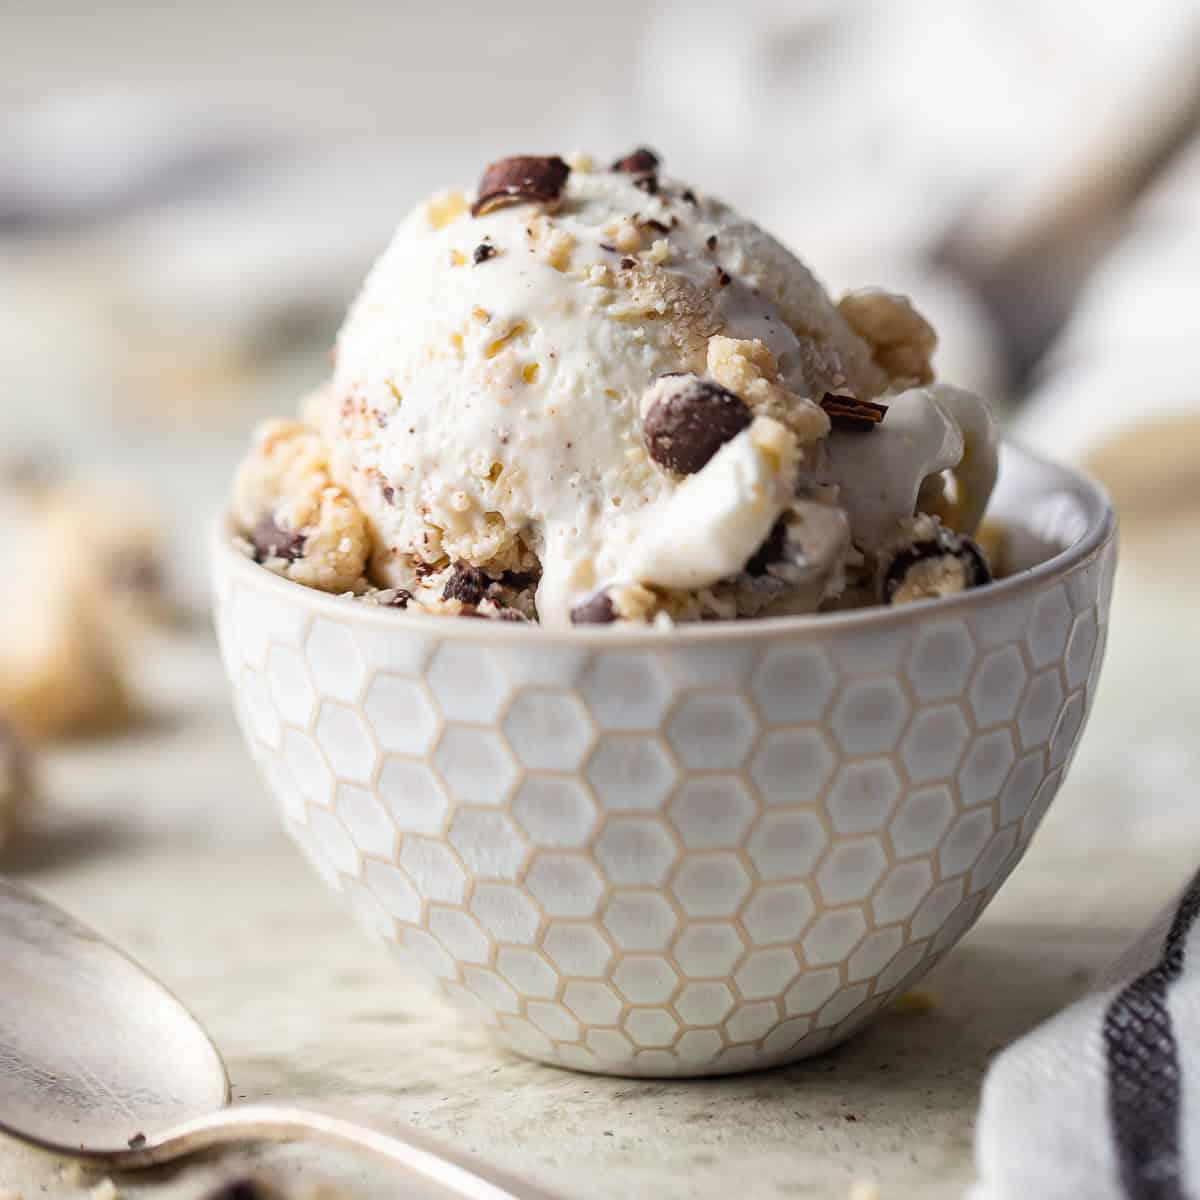 Homemade cookie dough ice cream scooped into a white ceramic bowl.